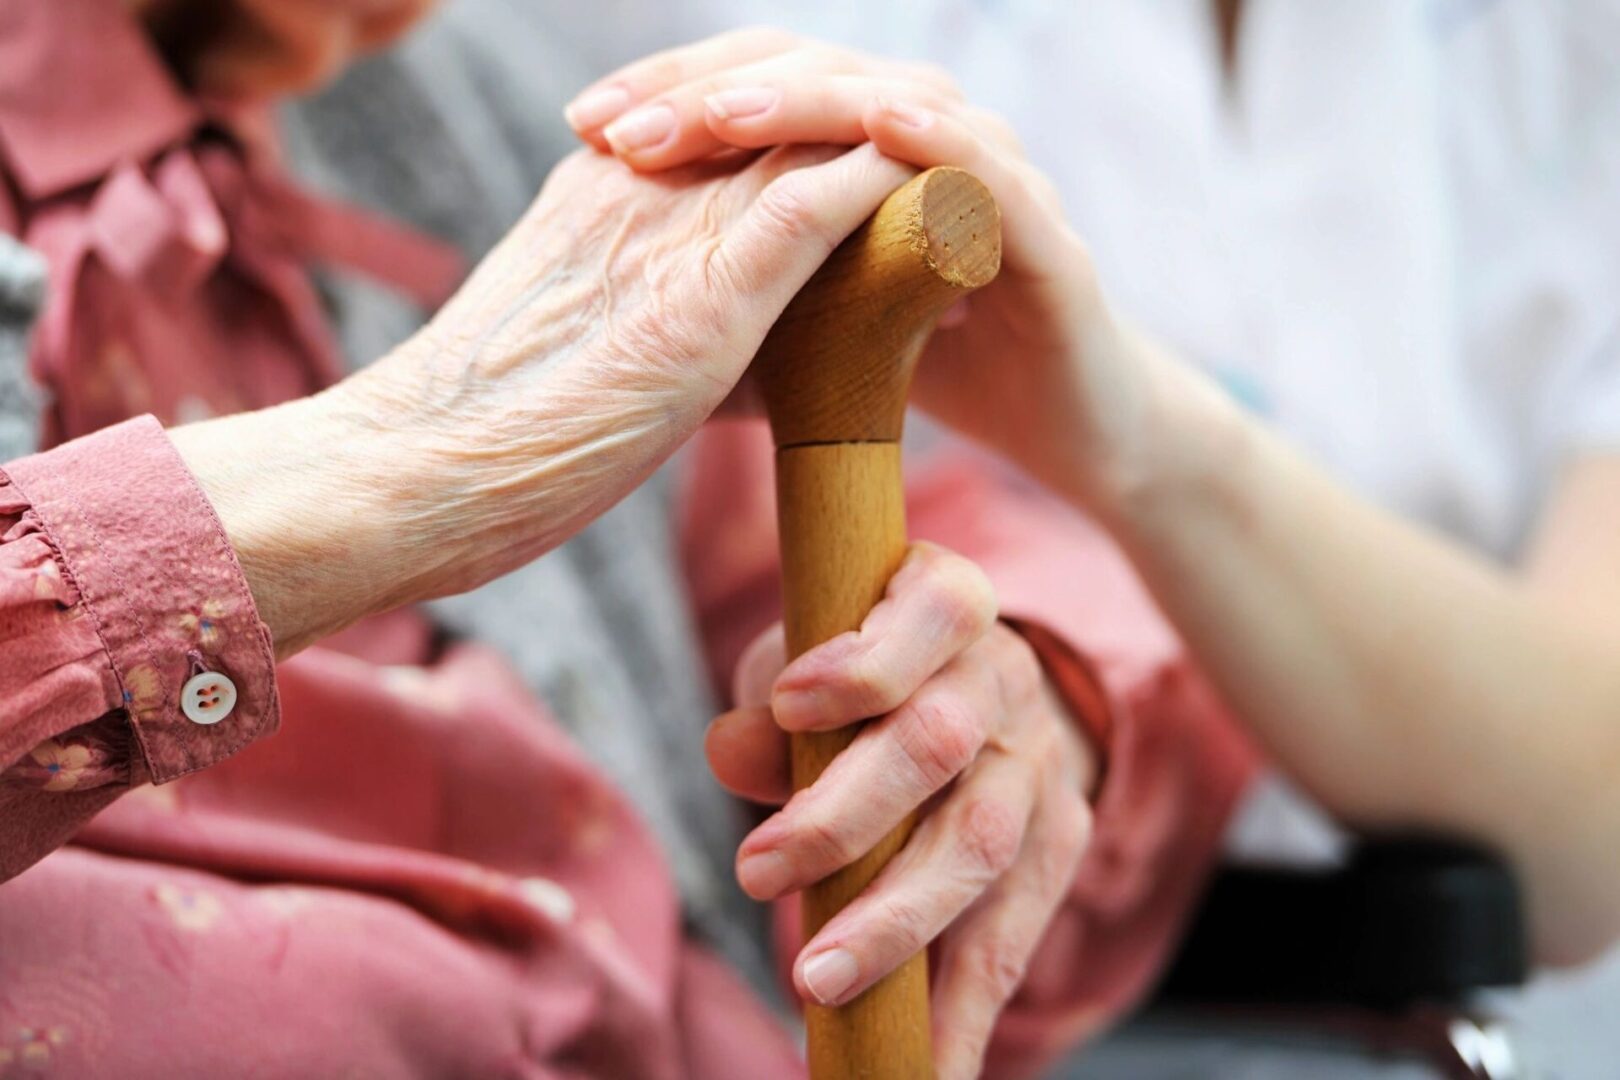 Florida's Best Senior Home Care